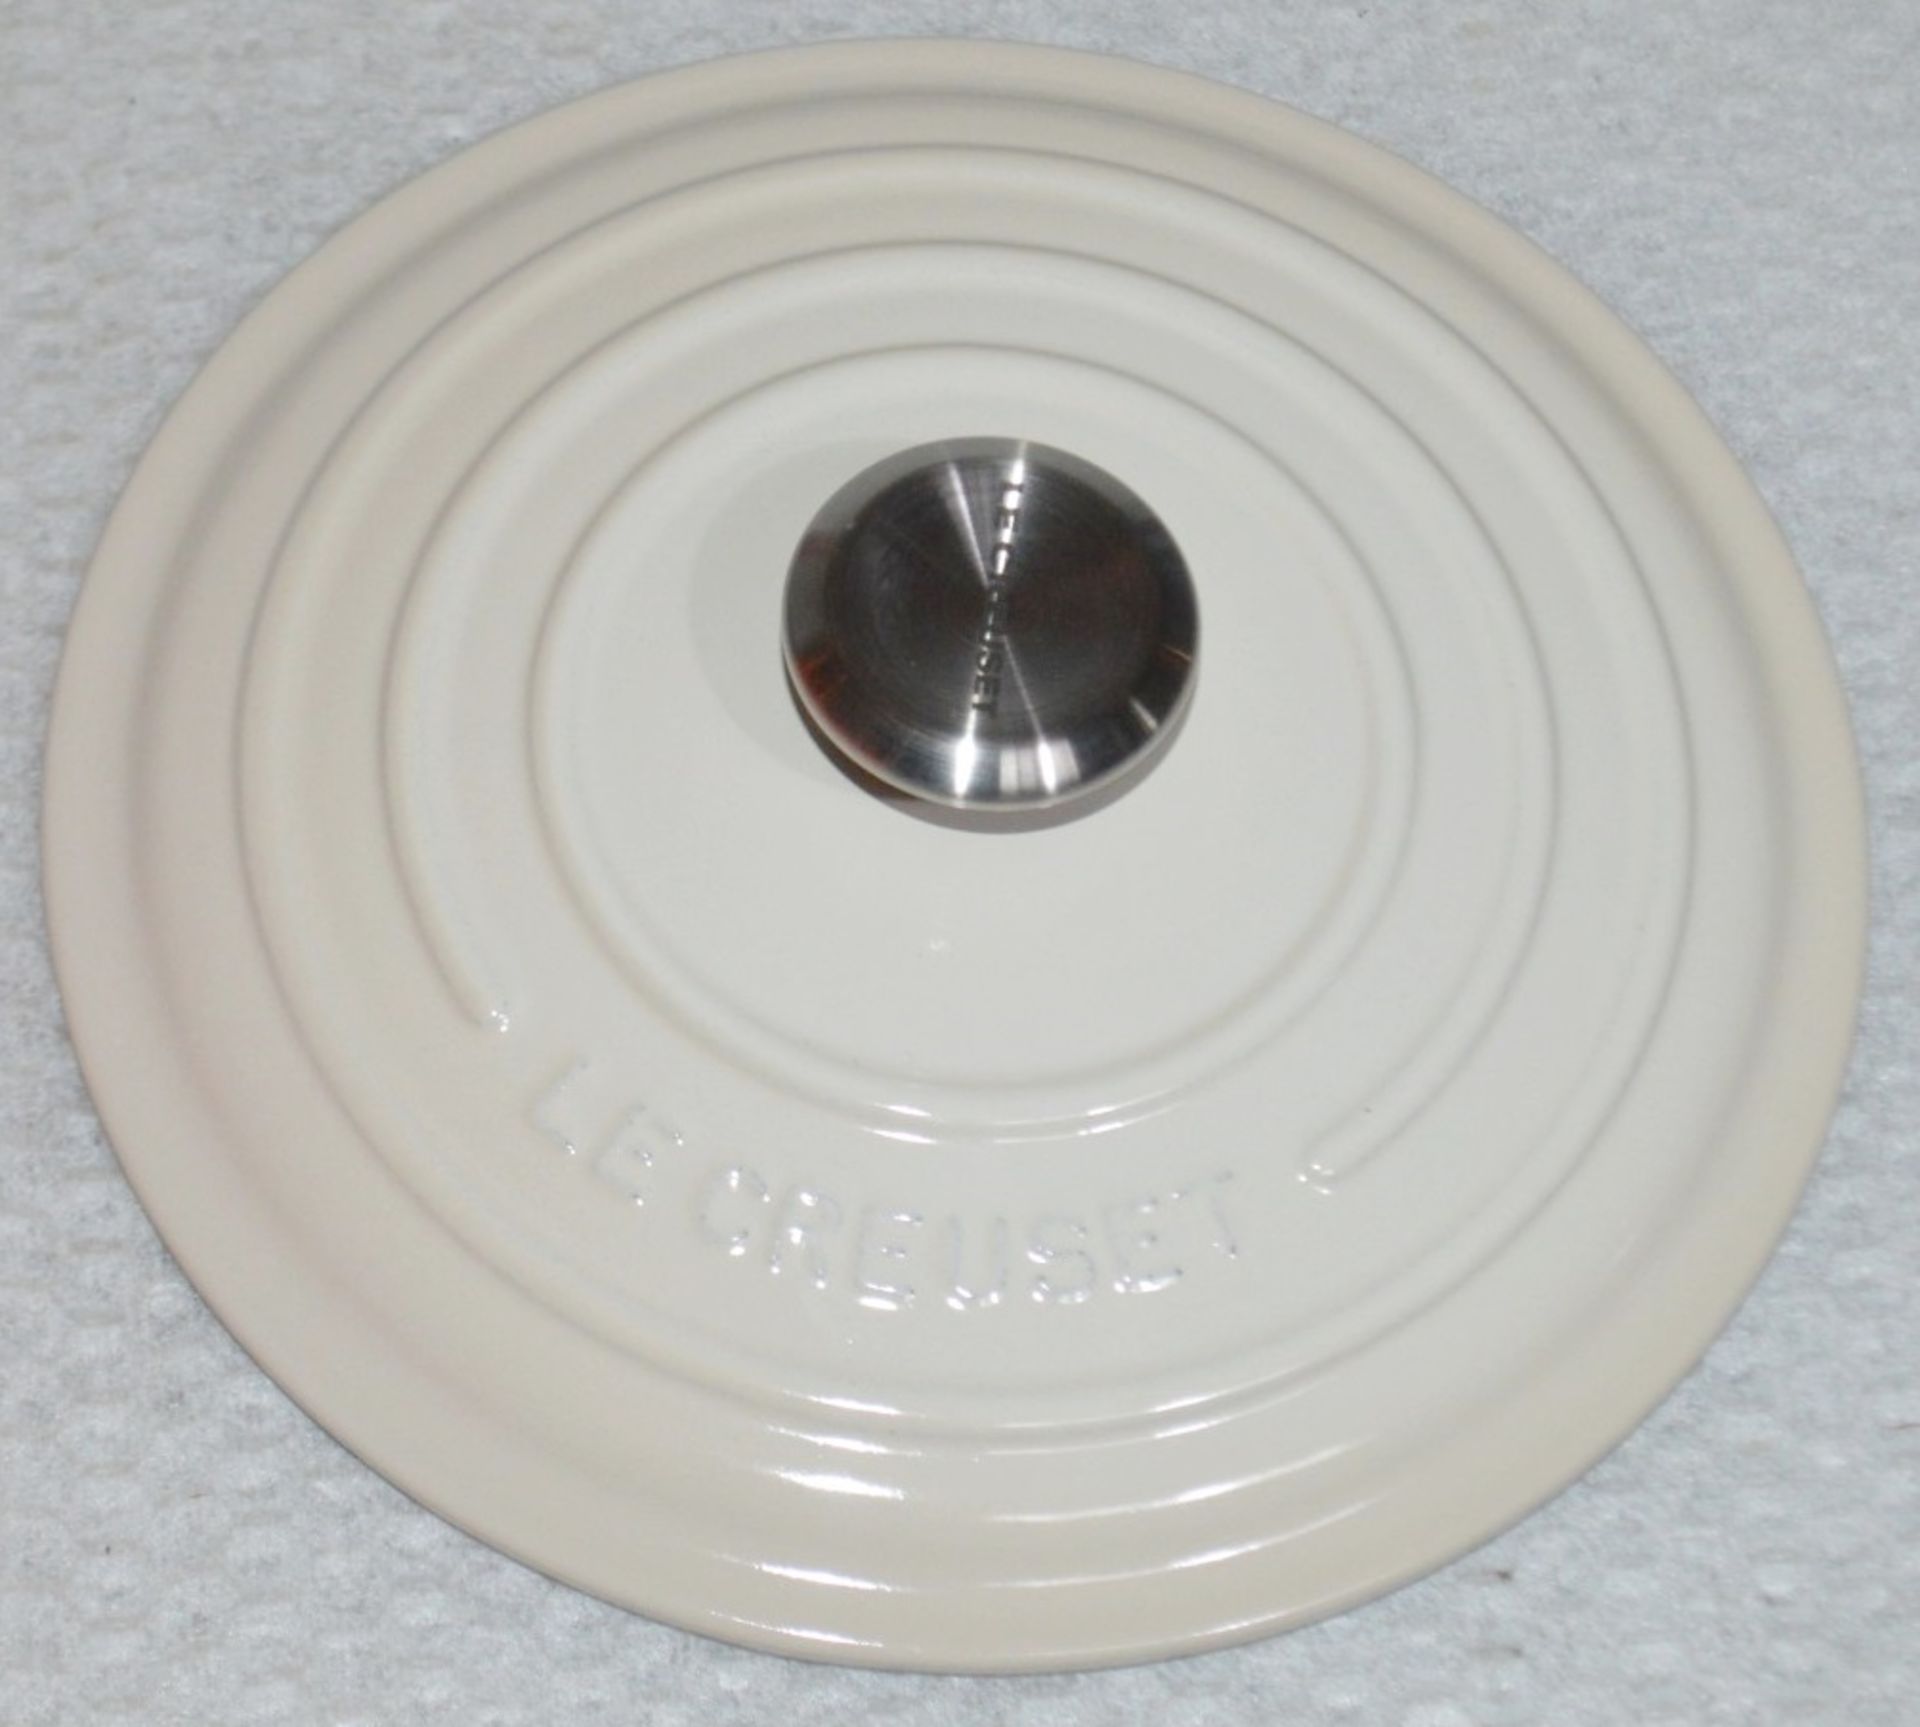 1 x LE CREUSET Signature Cast Iron Round Casserole Dish With Lid In Meringue (20cm) - RRP £200.00 - Image 3 of 10